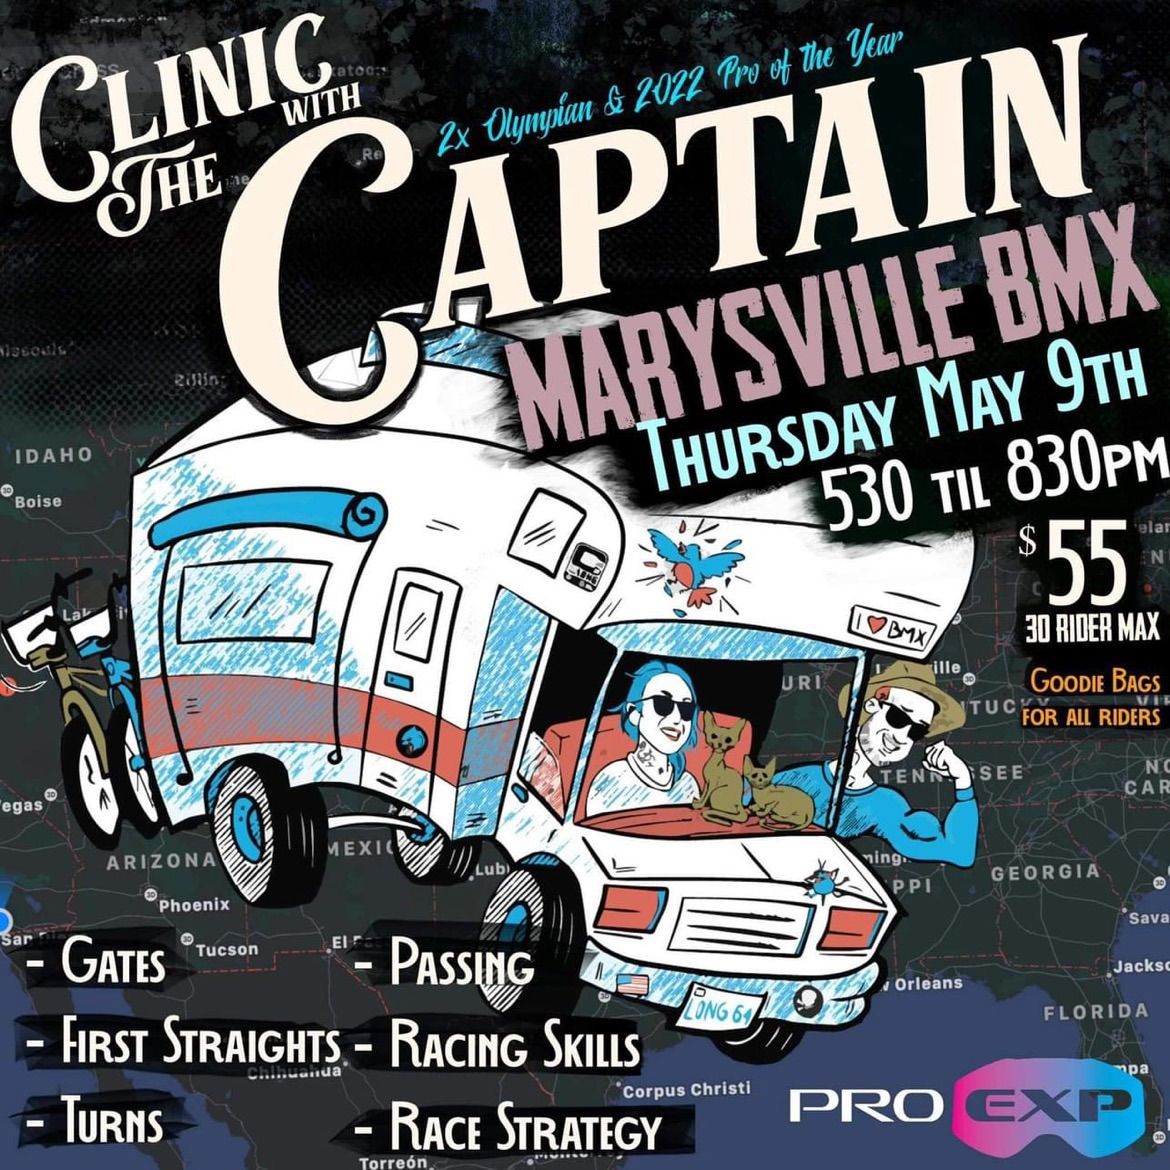 Marysville BMX - Clinic with the Captain Nic Long